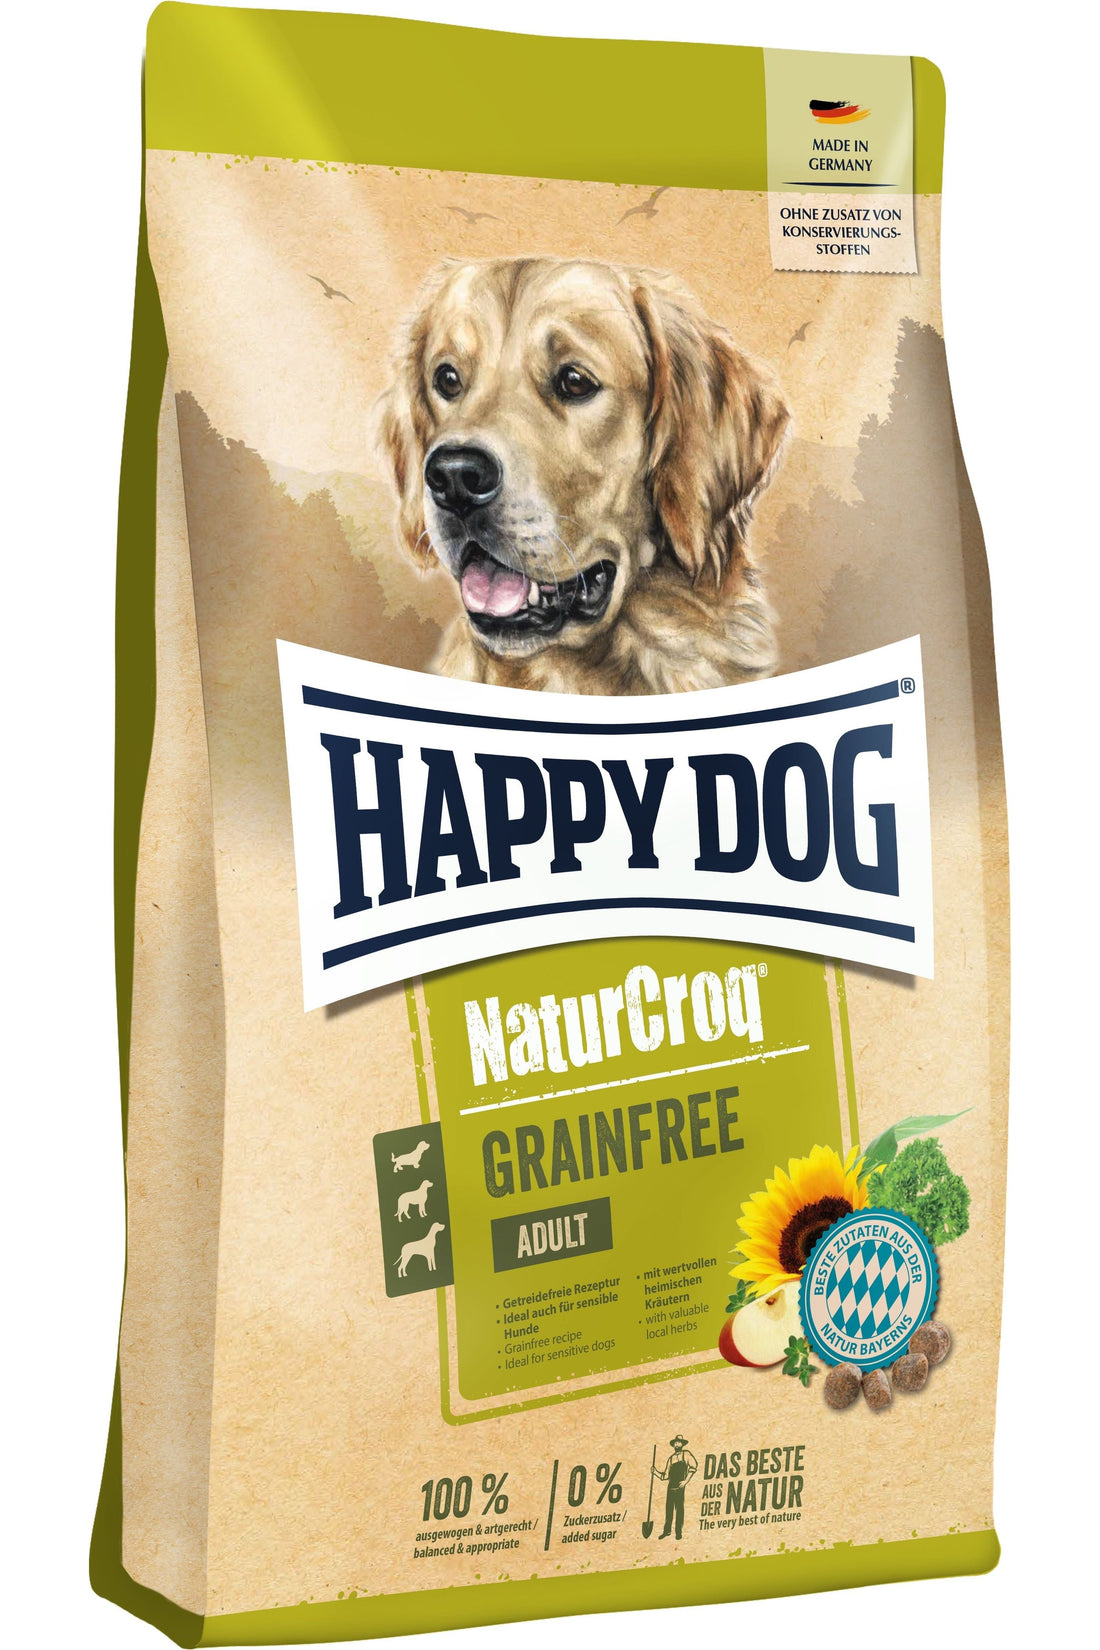 Happy Dog NaturCroq Kornfri - AV-Larsen